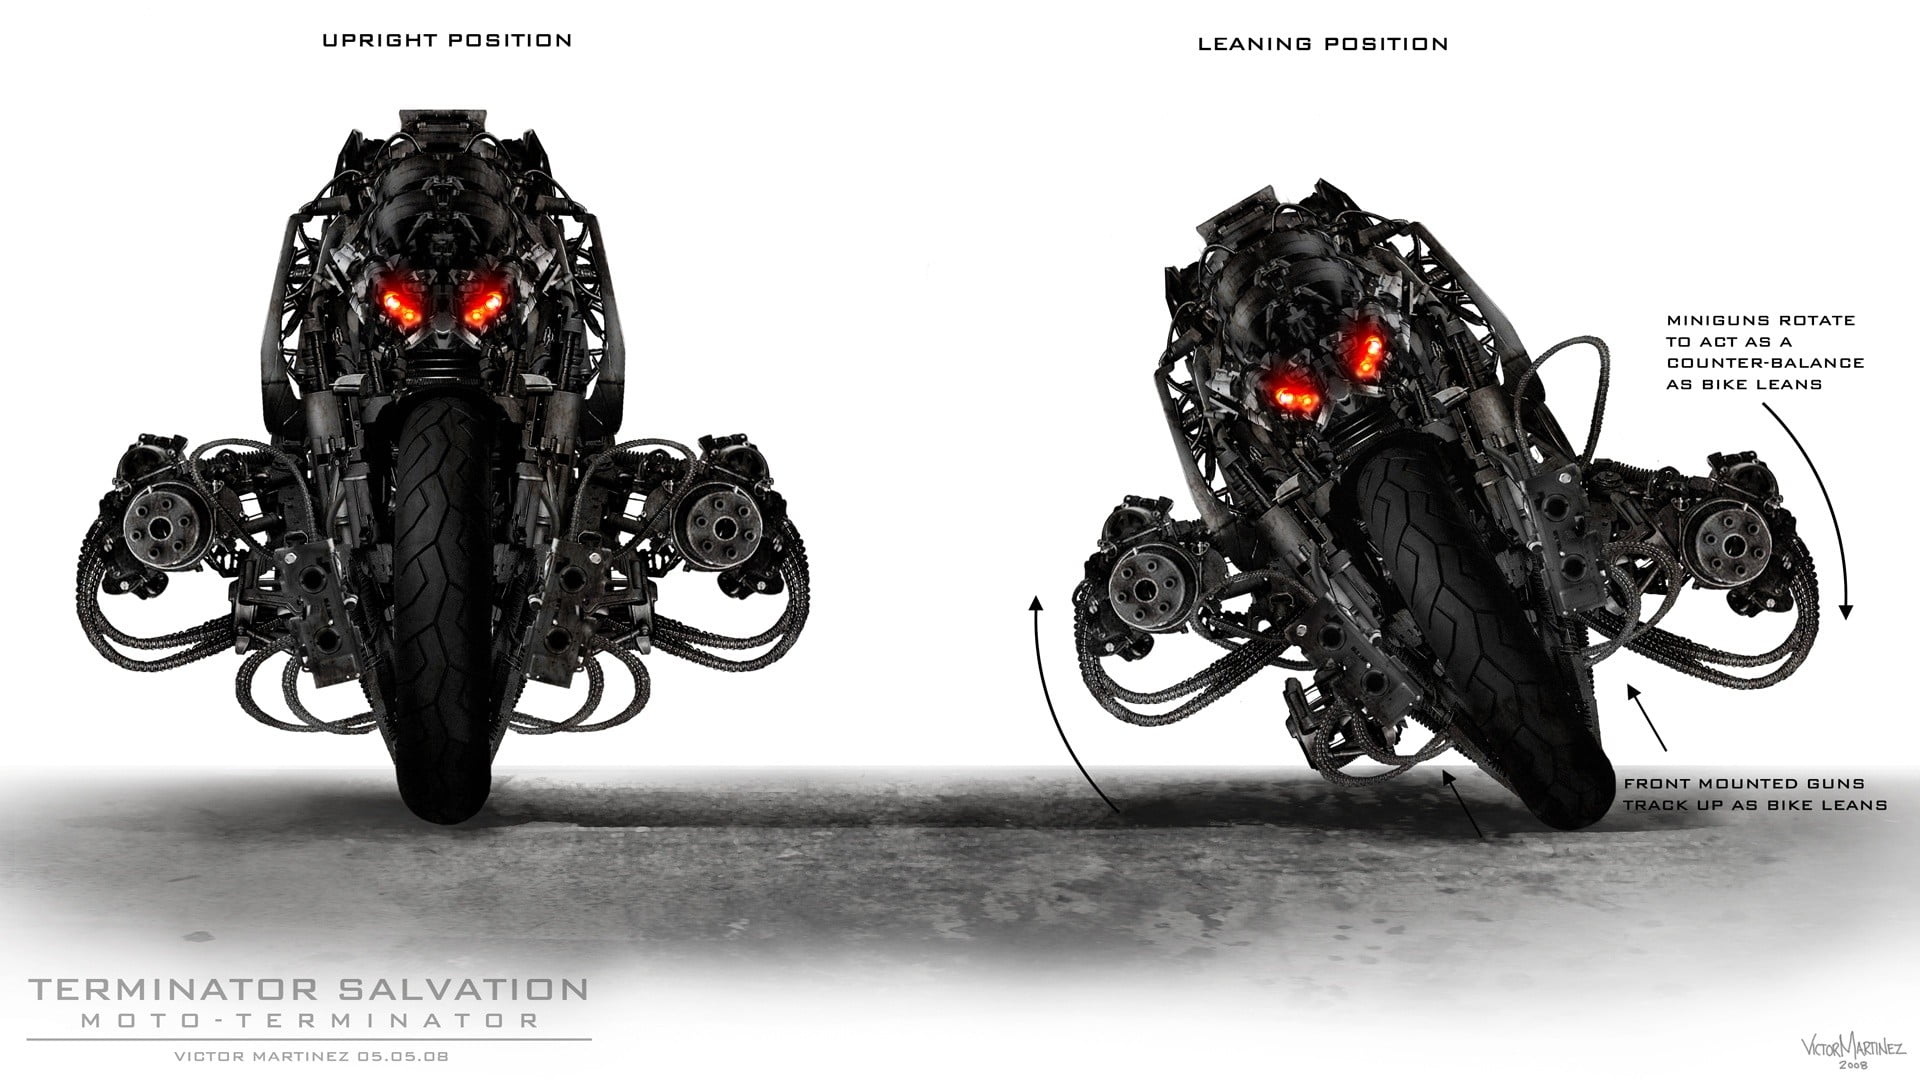 Terminator Salvation terminator collage, motorcycle, Moto-Terminator